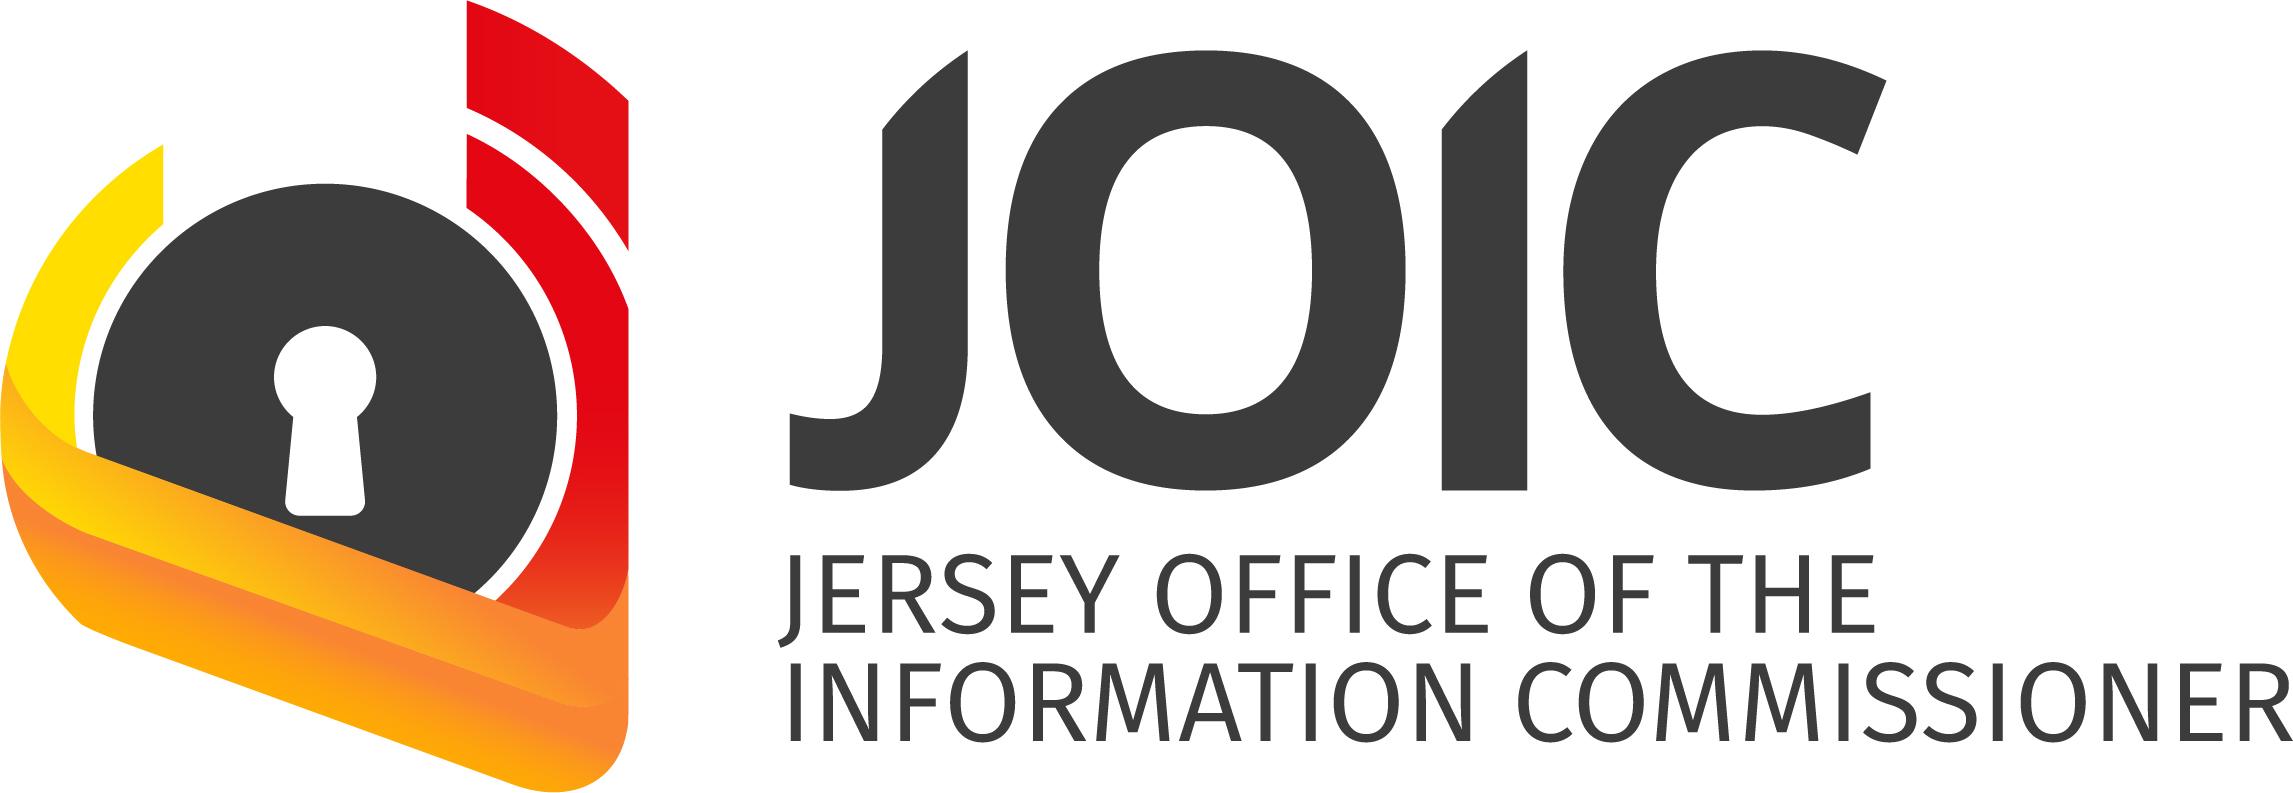 JOIC logo